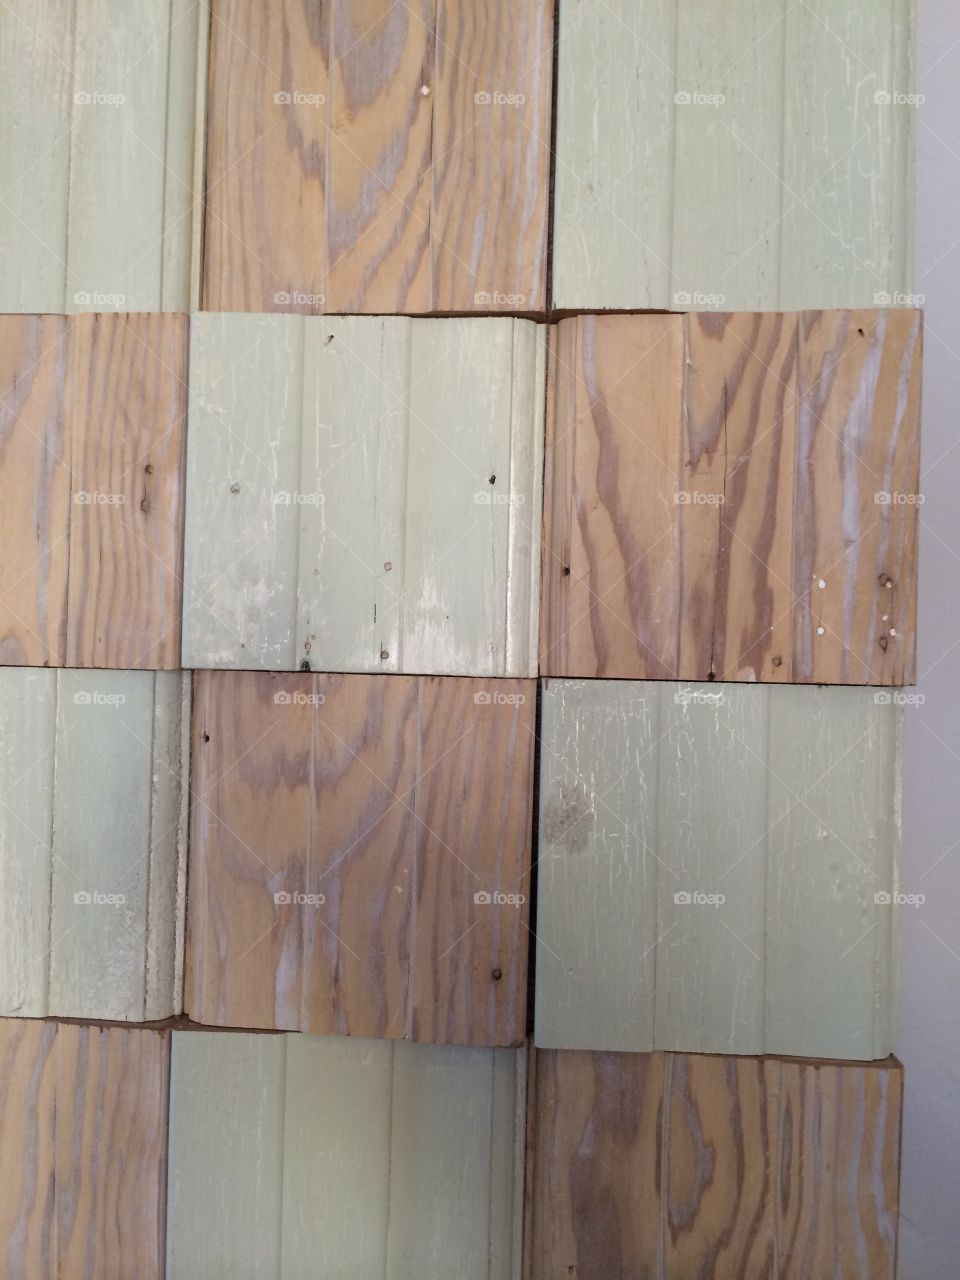 Square wood patterns